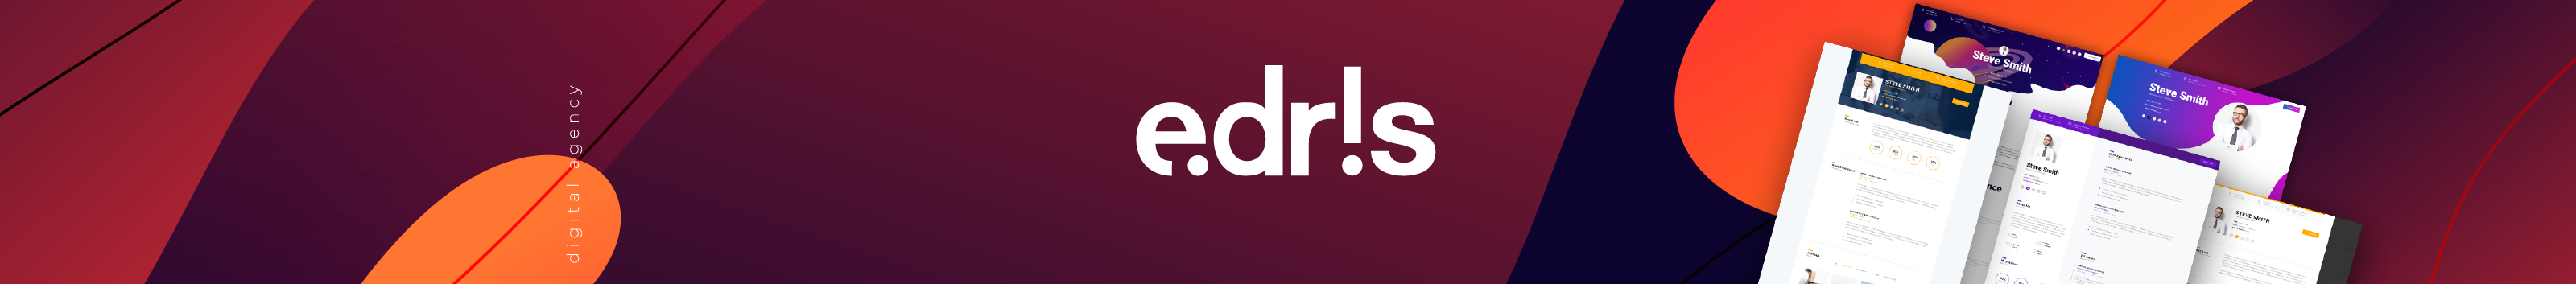 Edris Digital Agency's profile banner